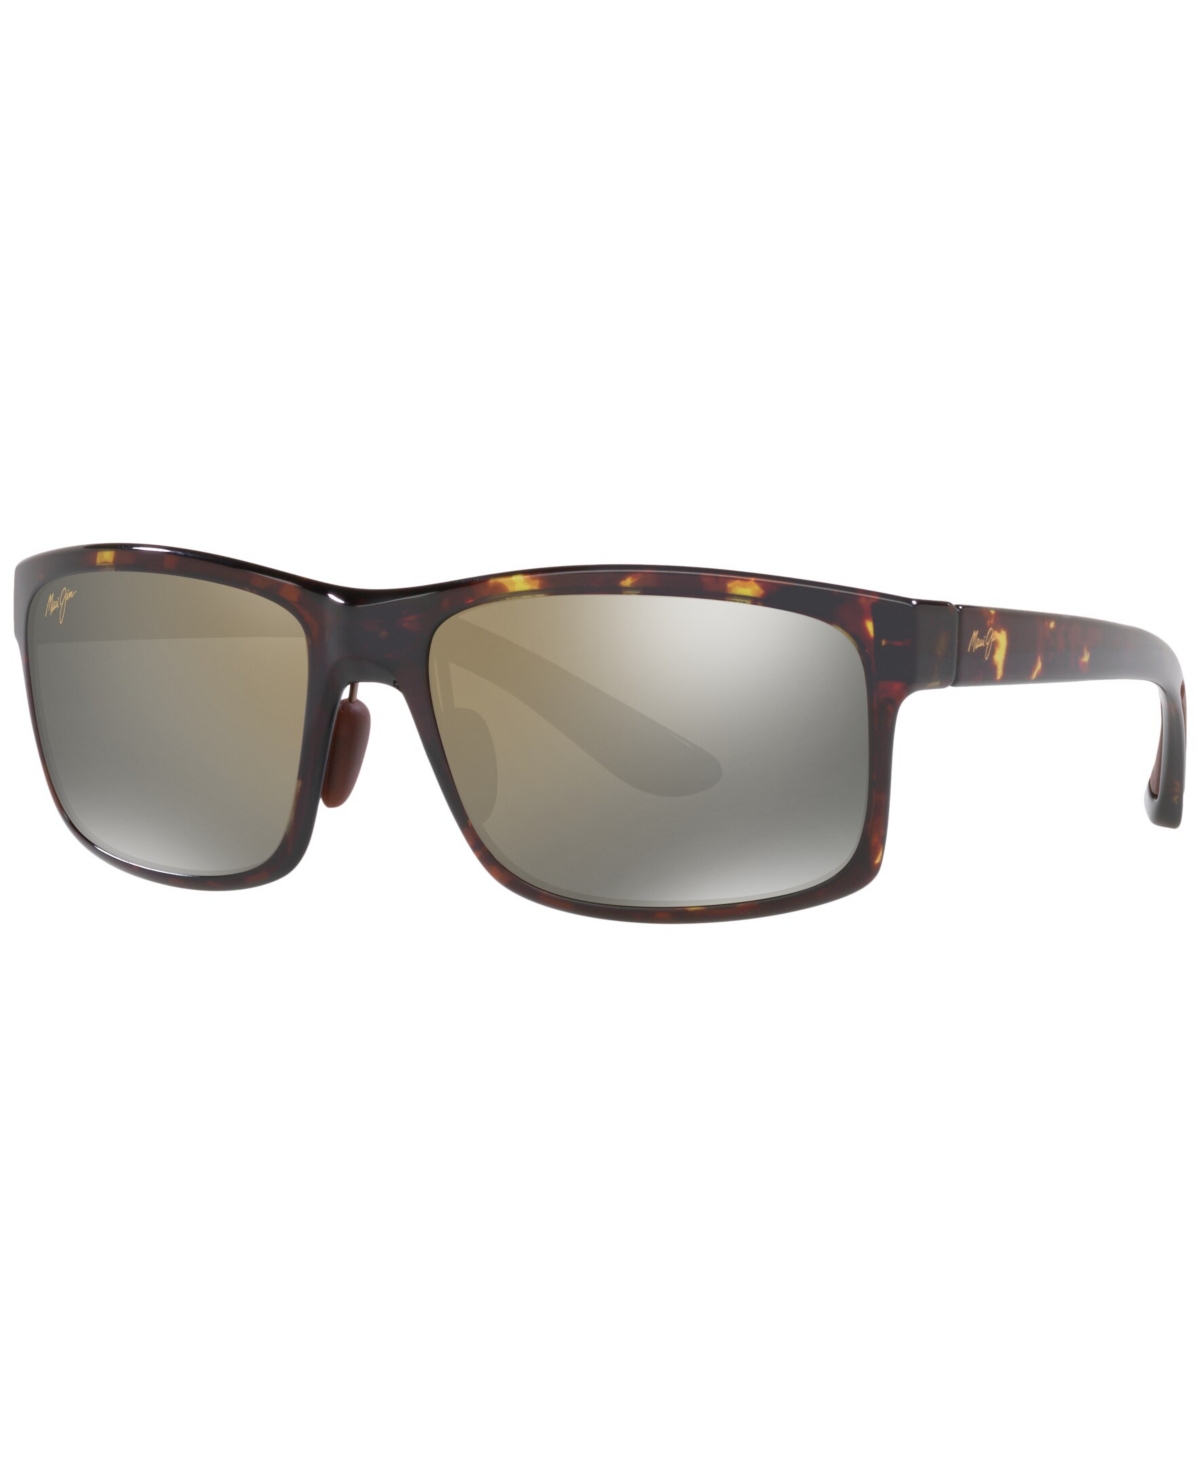 Unisex Polarized Sunglasses, 439 Pokowai Arch - Gray